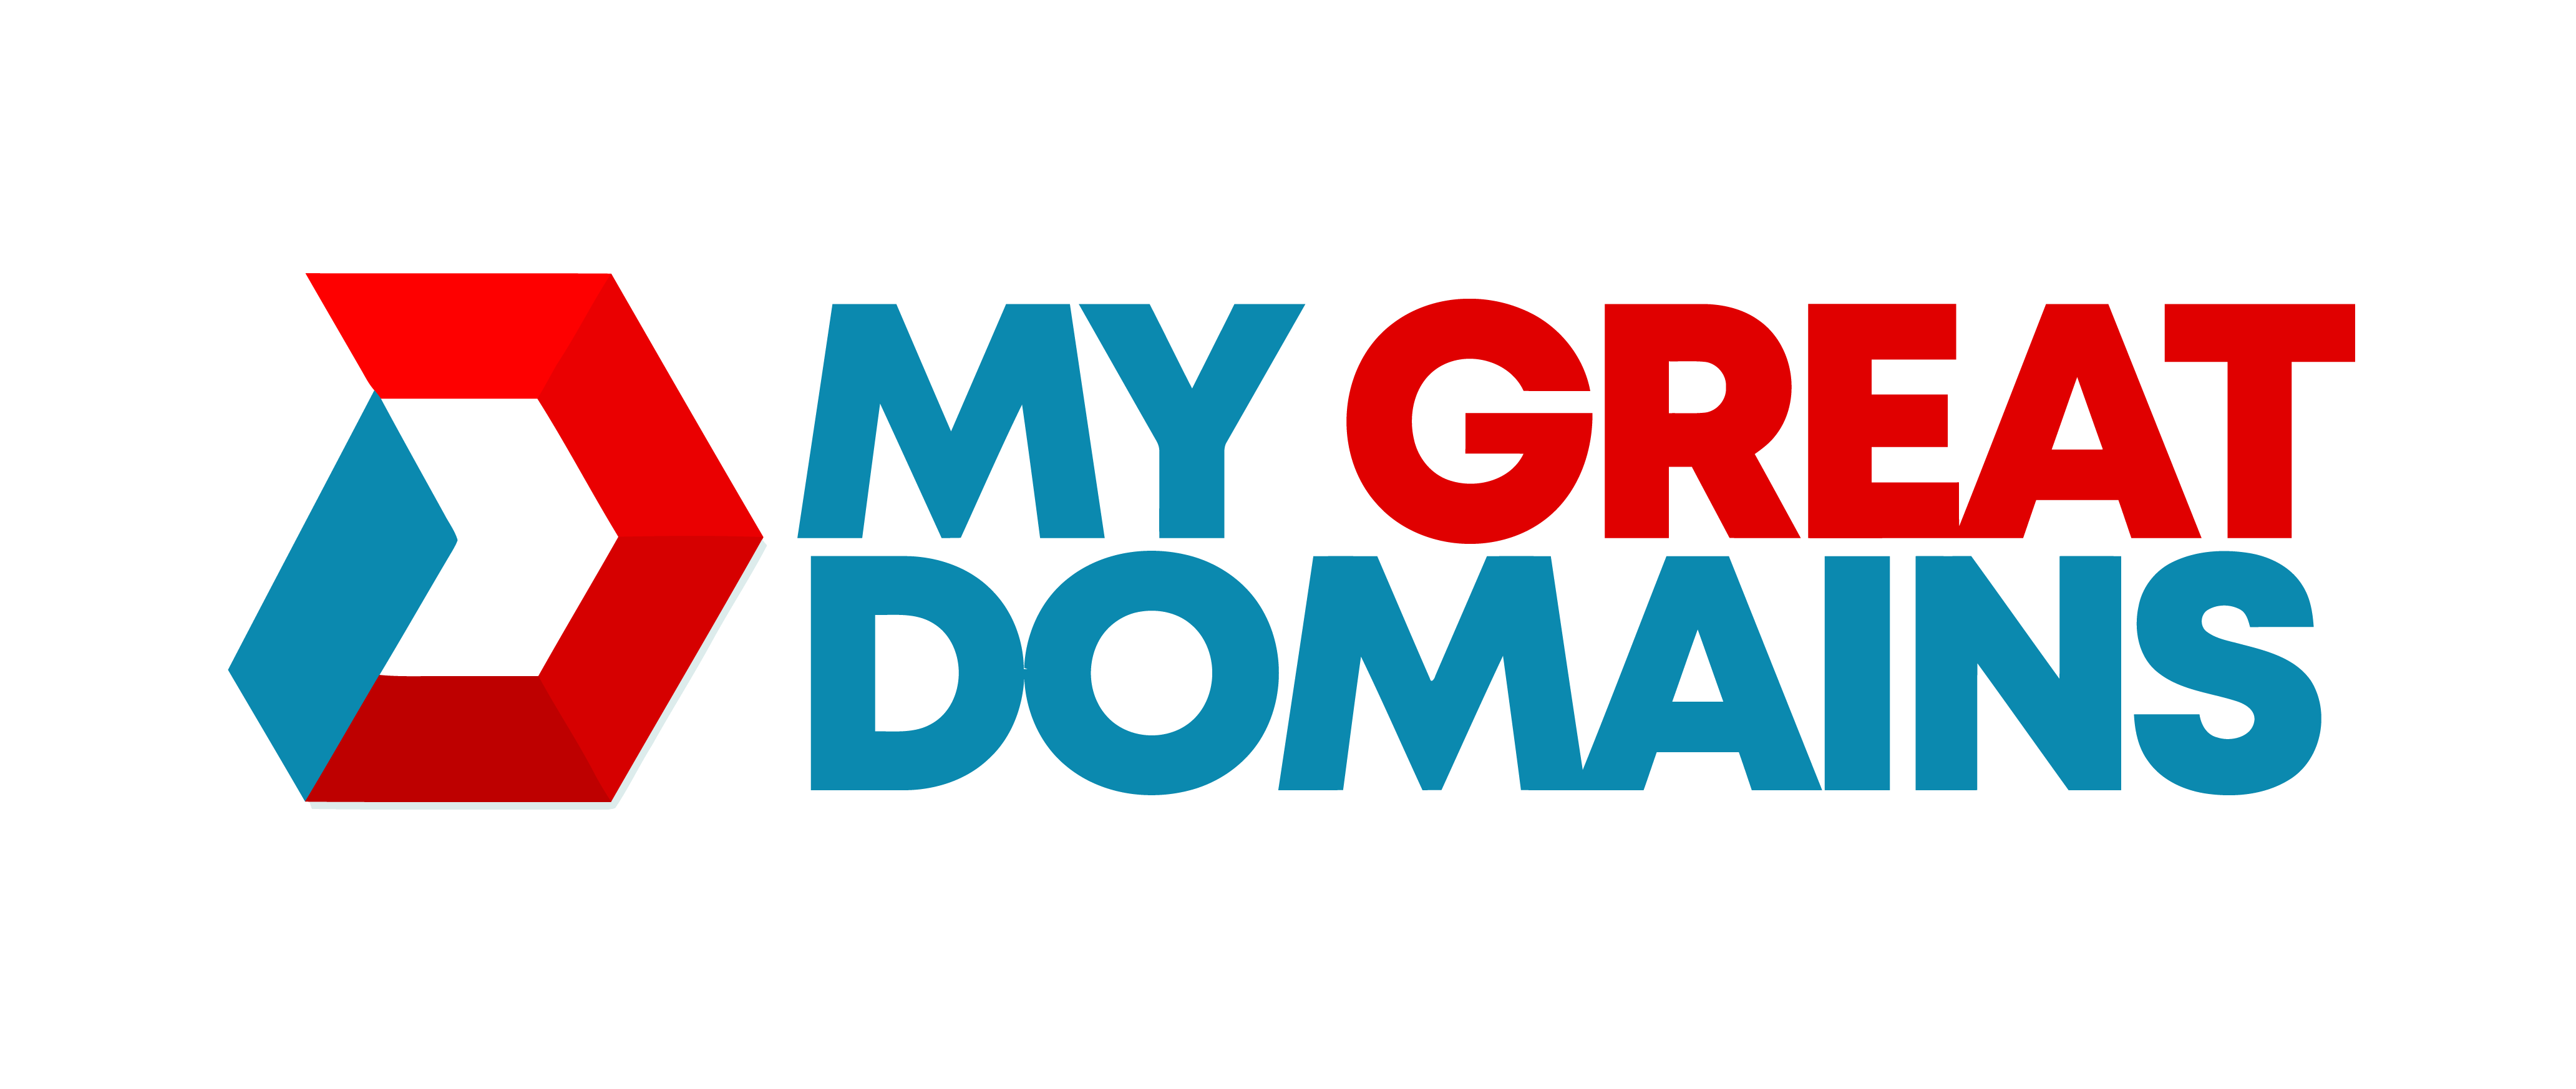 MyGreatDomains.com